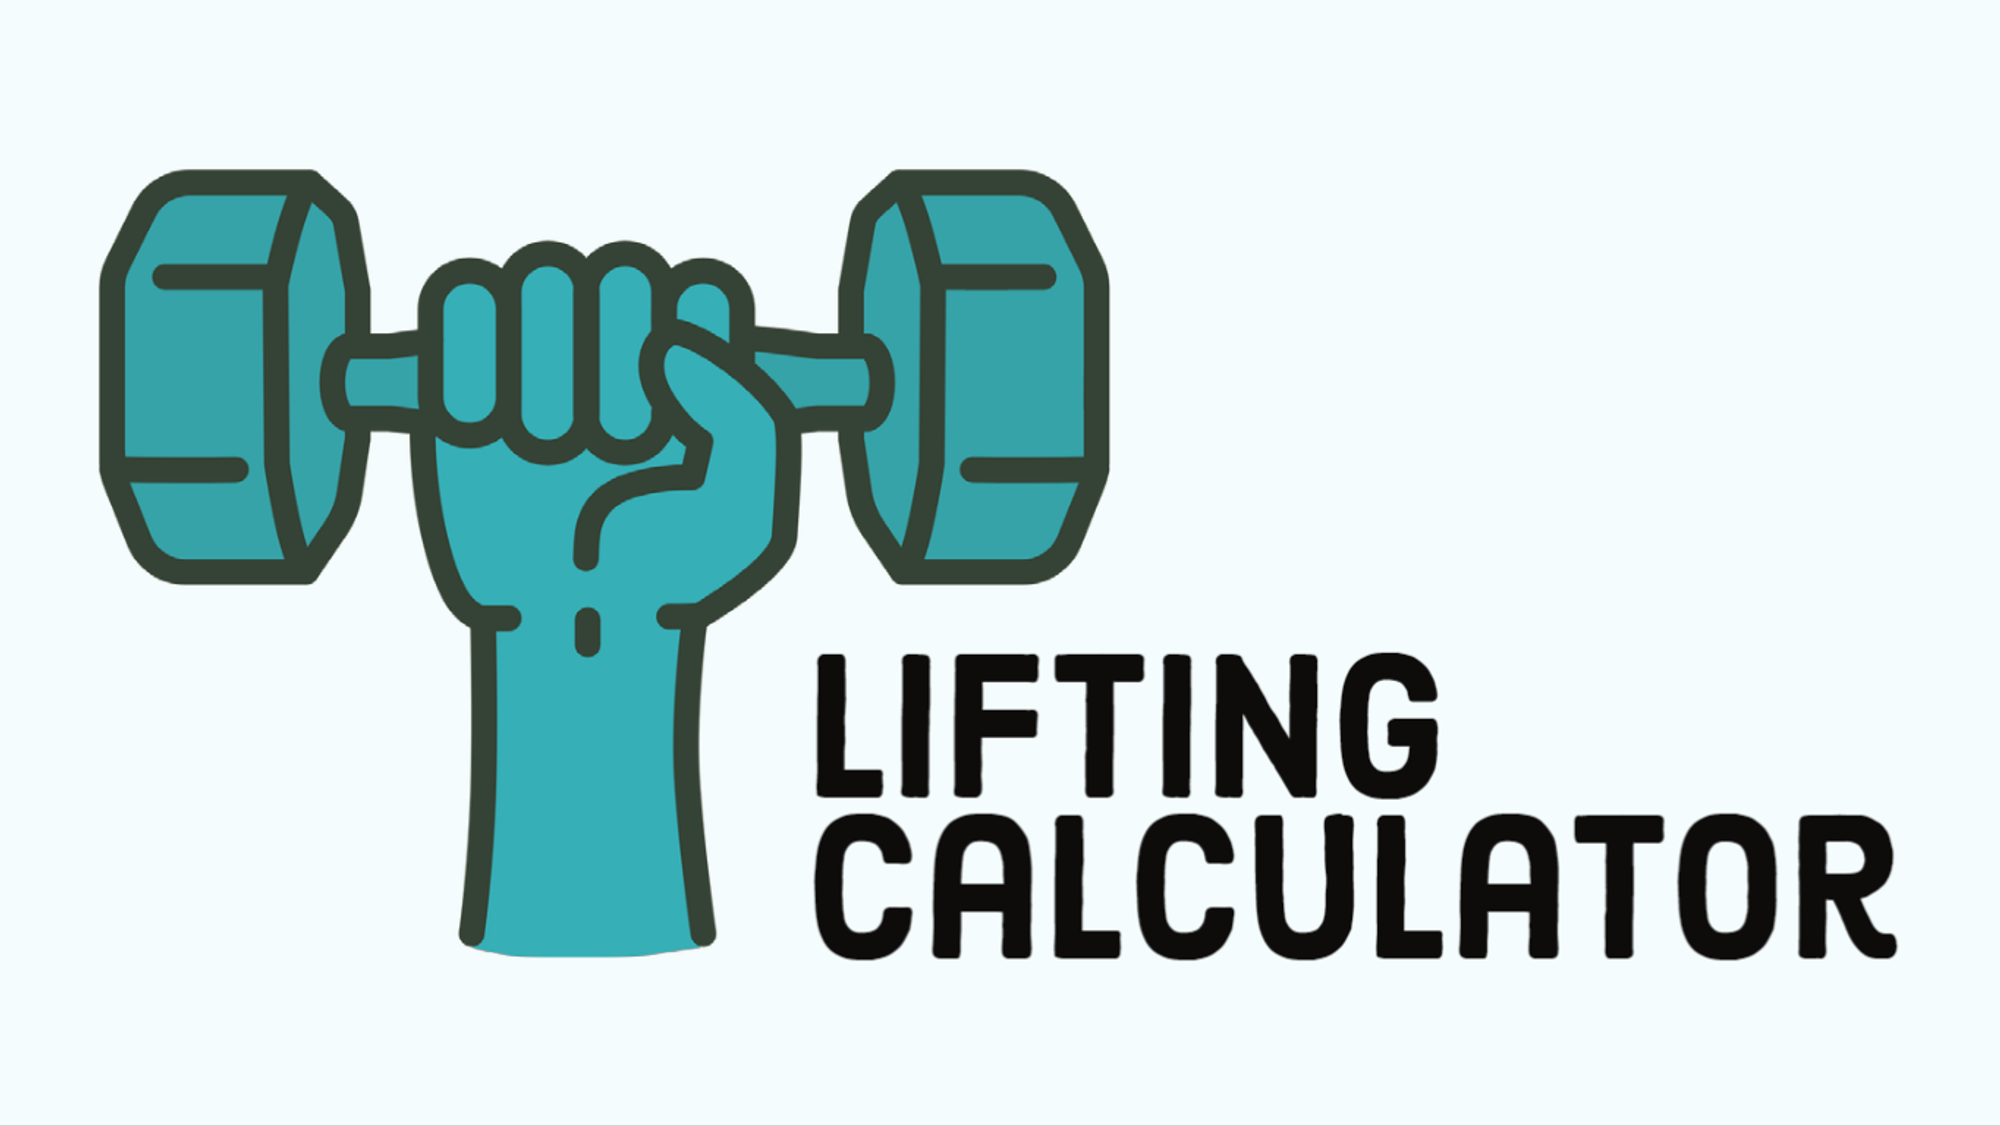 Weight Lifting Calculator